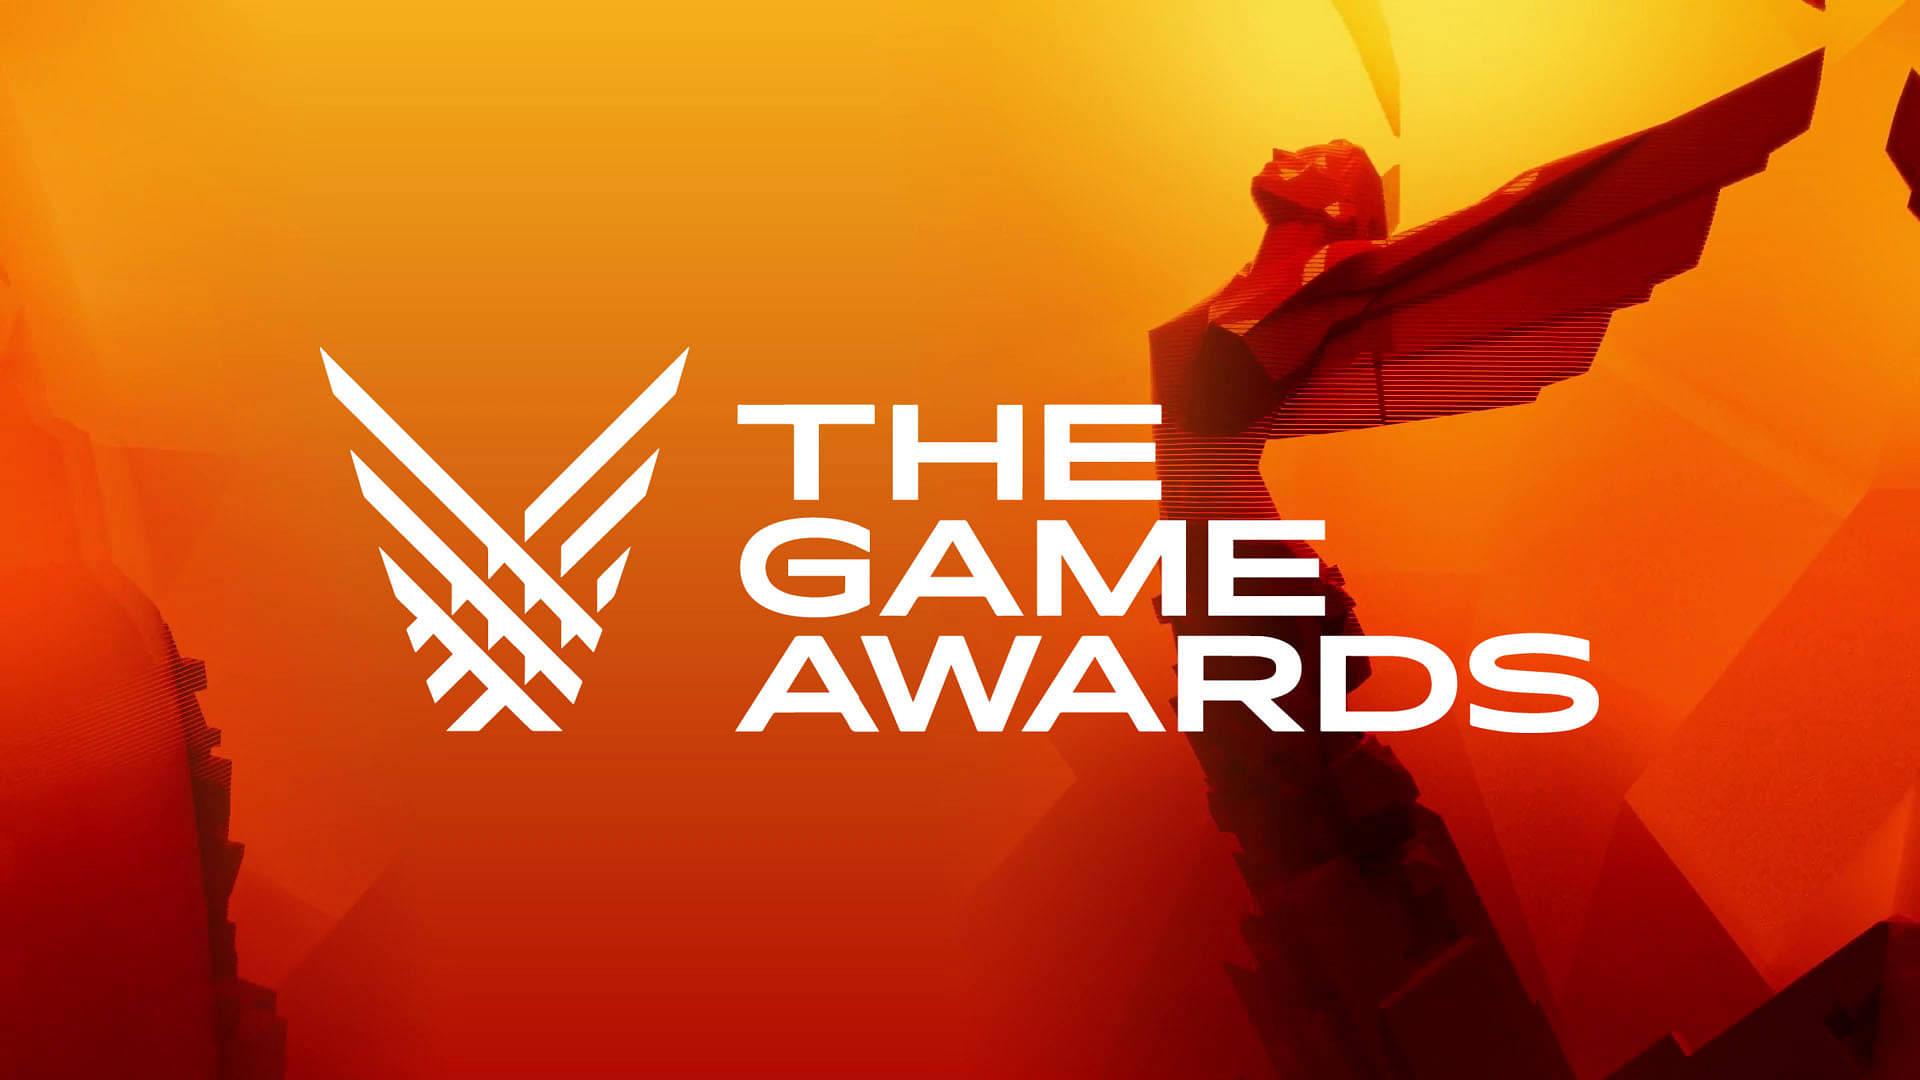 Baldur's Gate 3 sweeps The Game Awards 2023